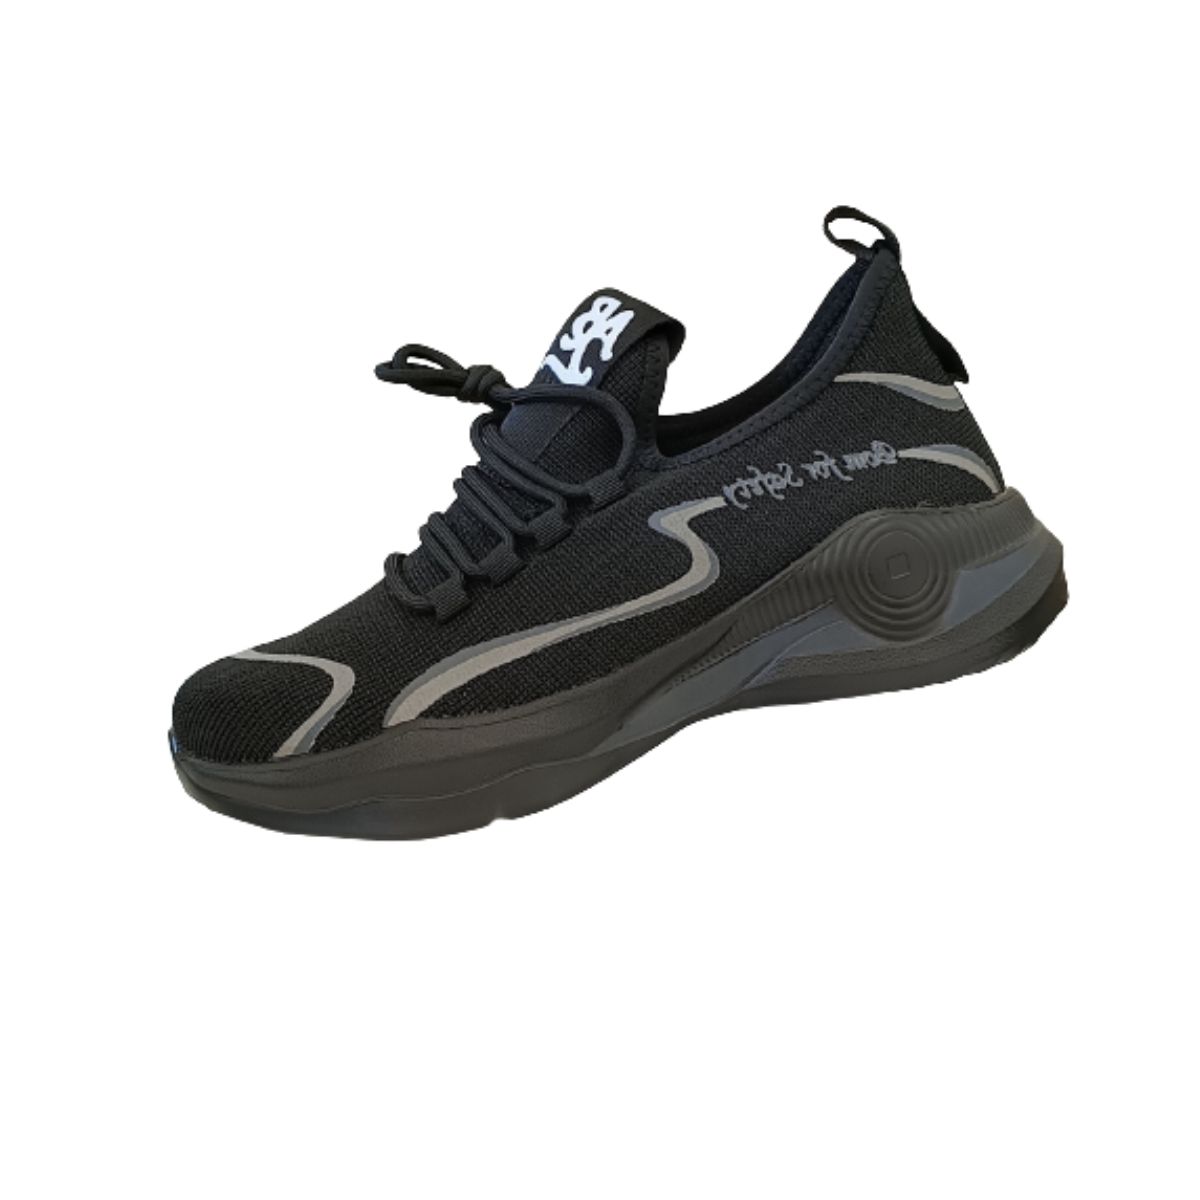 Safety Work Shoe With Steel Toe (Sneaker) - SWS03 - Anti-pierce & Water Repellent - Black